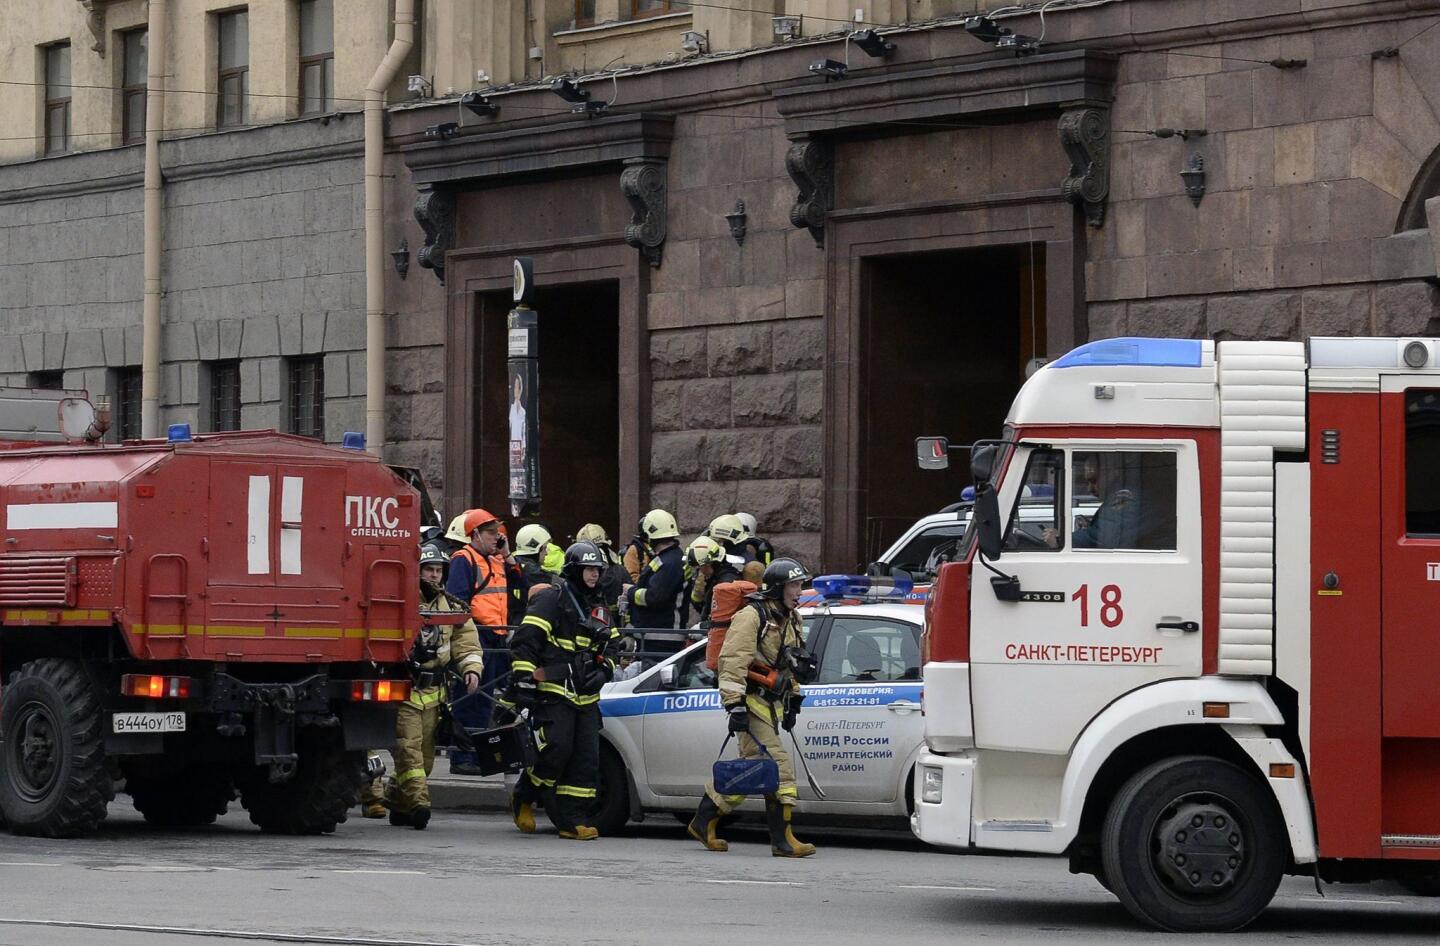 St. Petersburg subway explosion